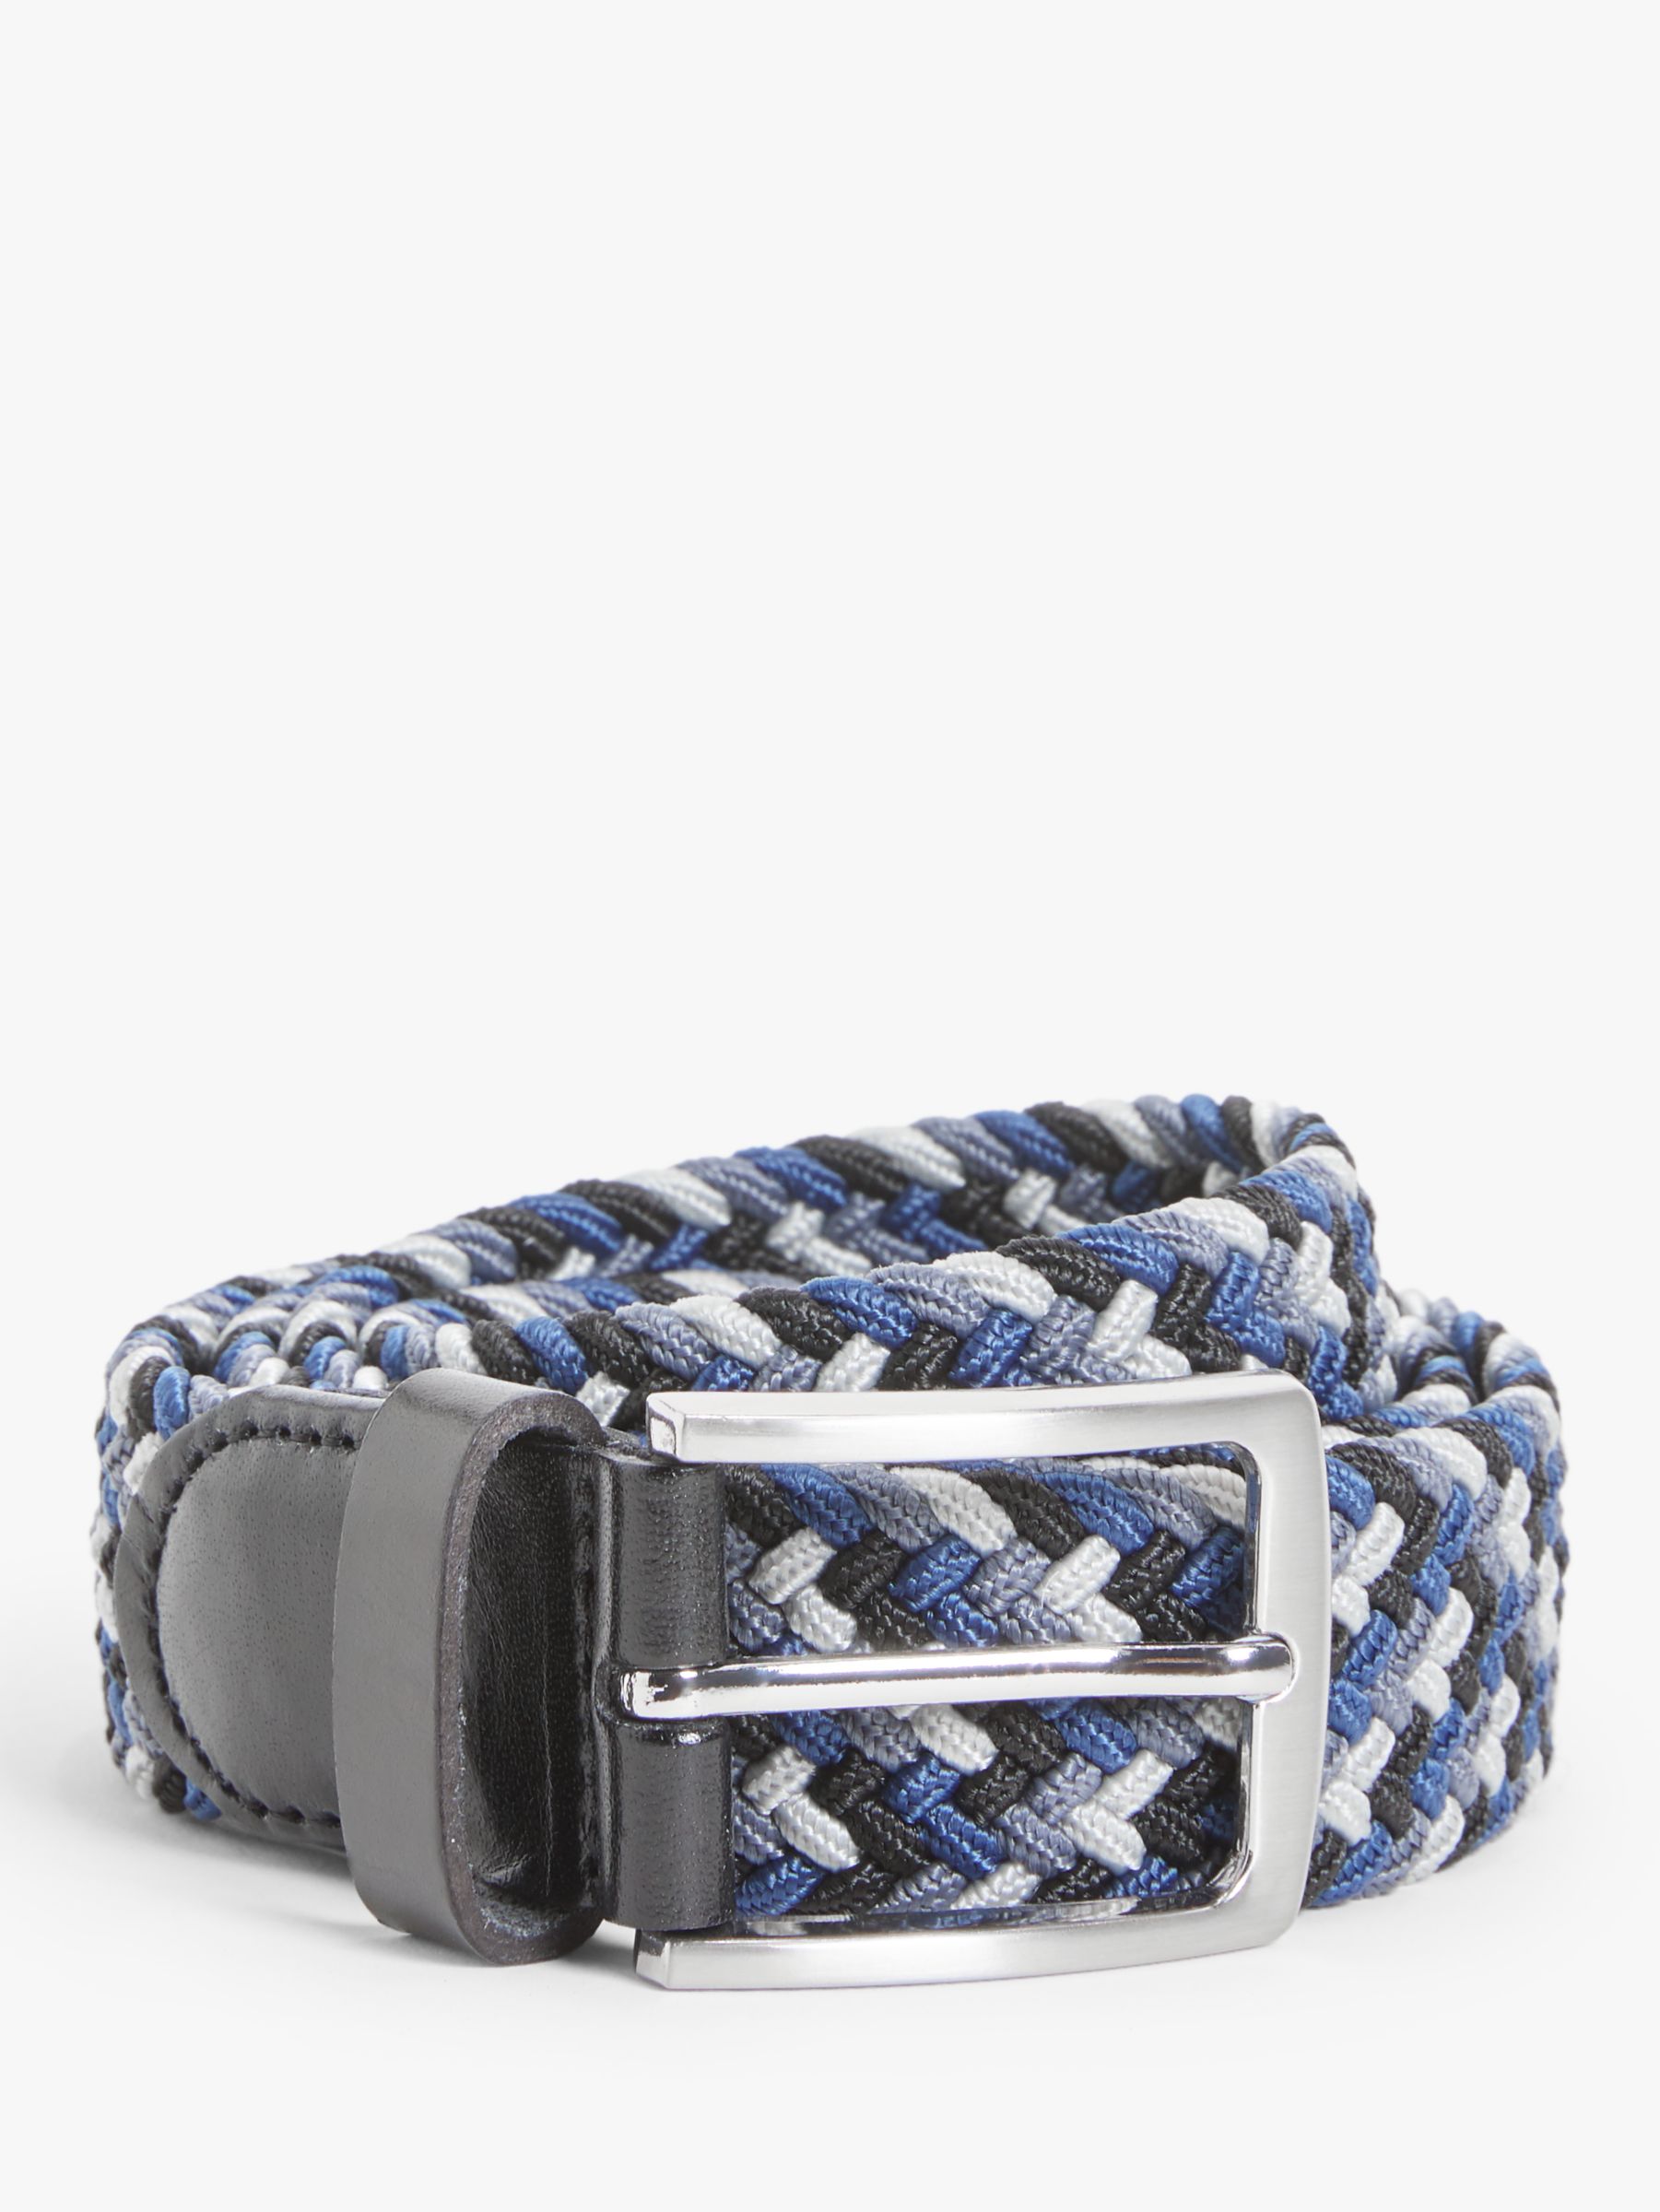 John Lewis 35mm Woven Belt, Blue/Multi at John Lewis & Partners